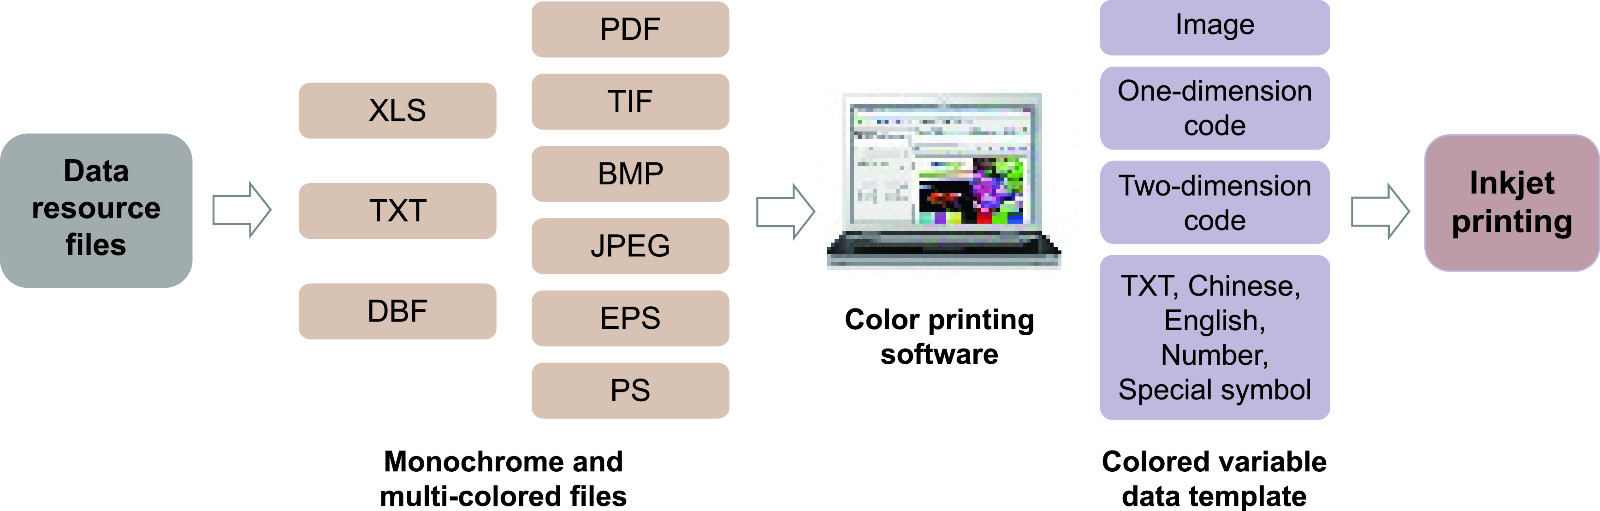 cost effective digital inkjet printing arojet custom made for packaging-8